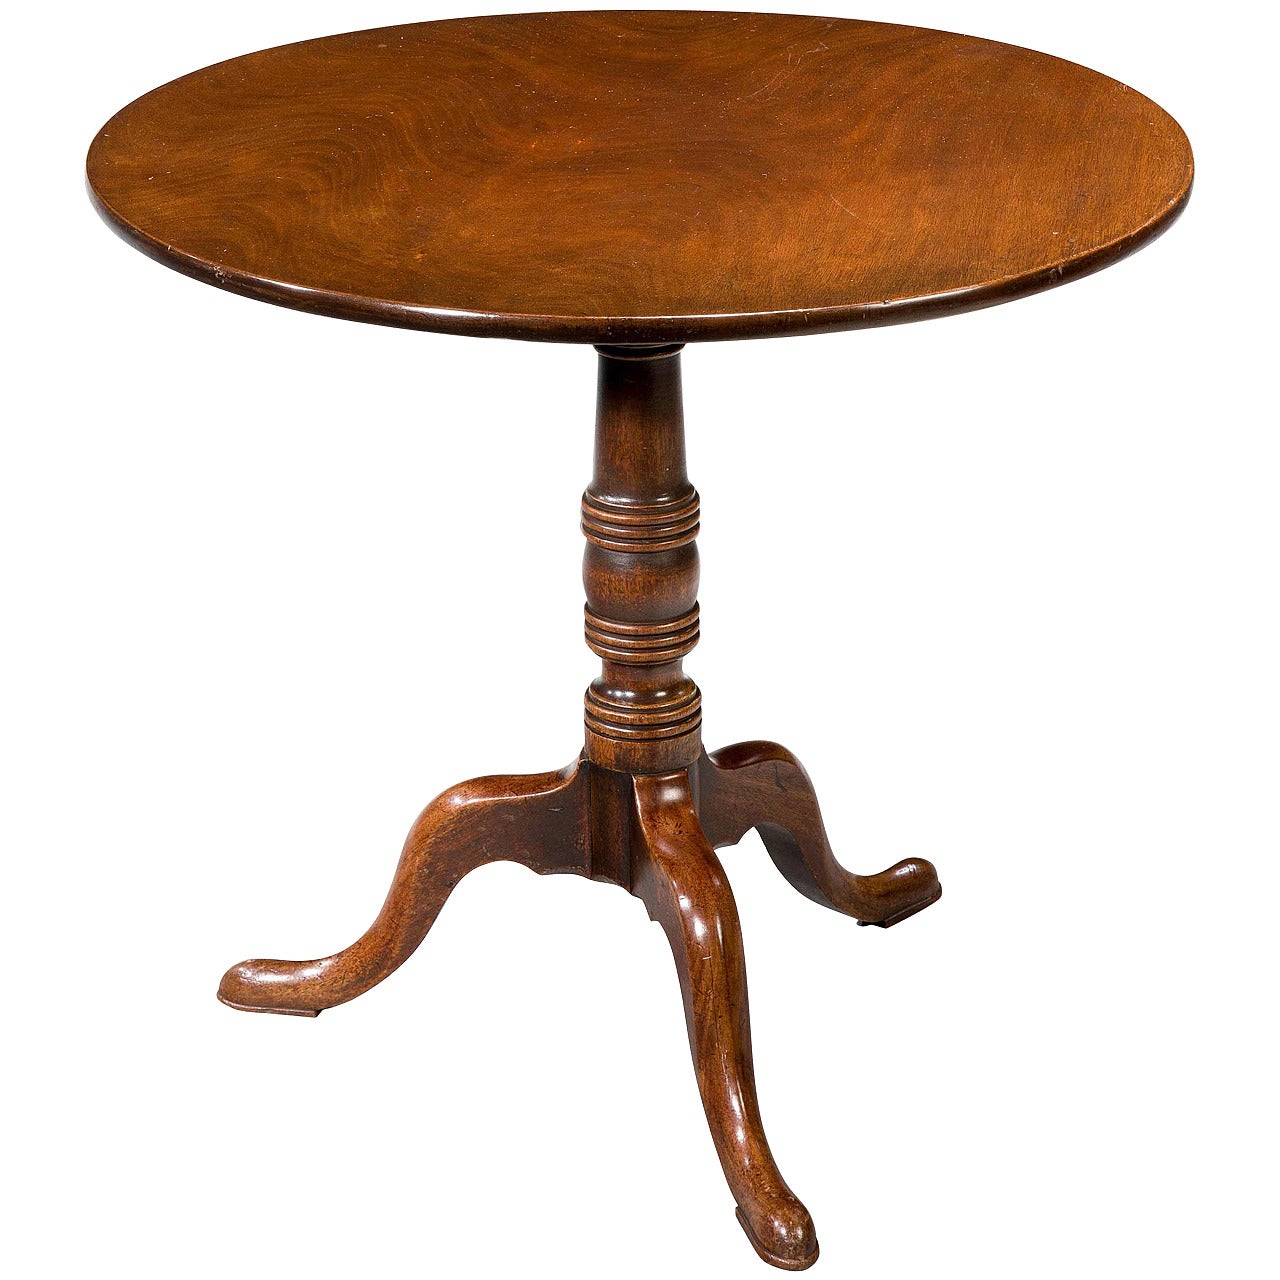 George III Period Mahogany Tilt-Top Table